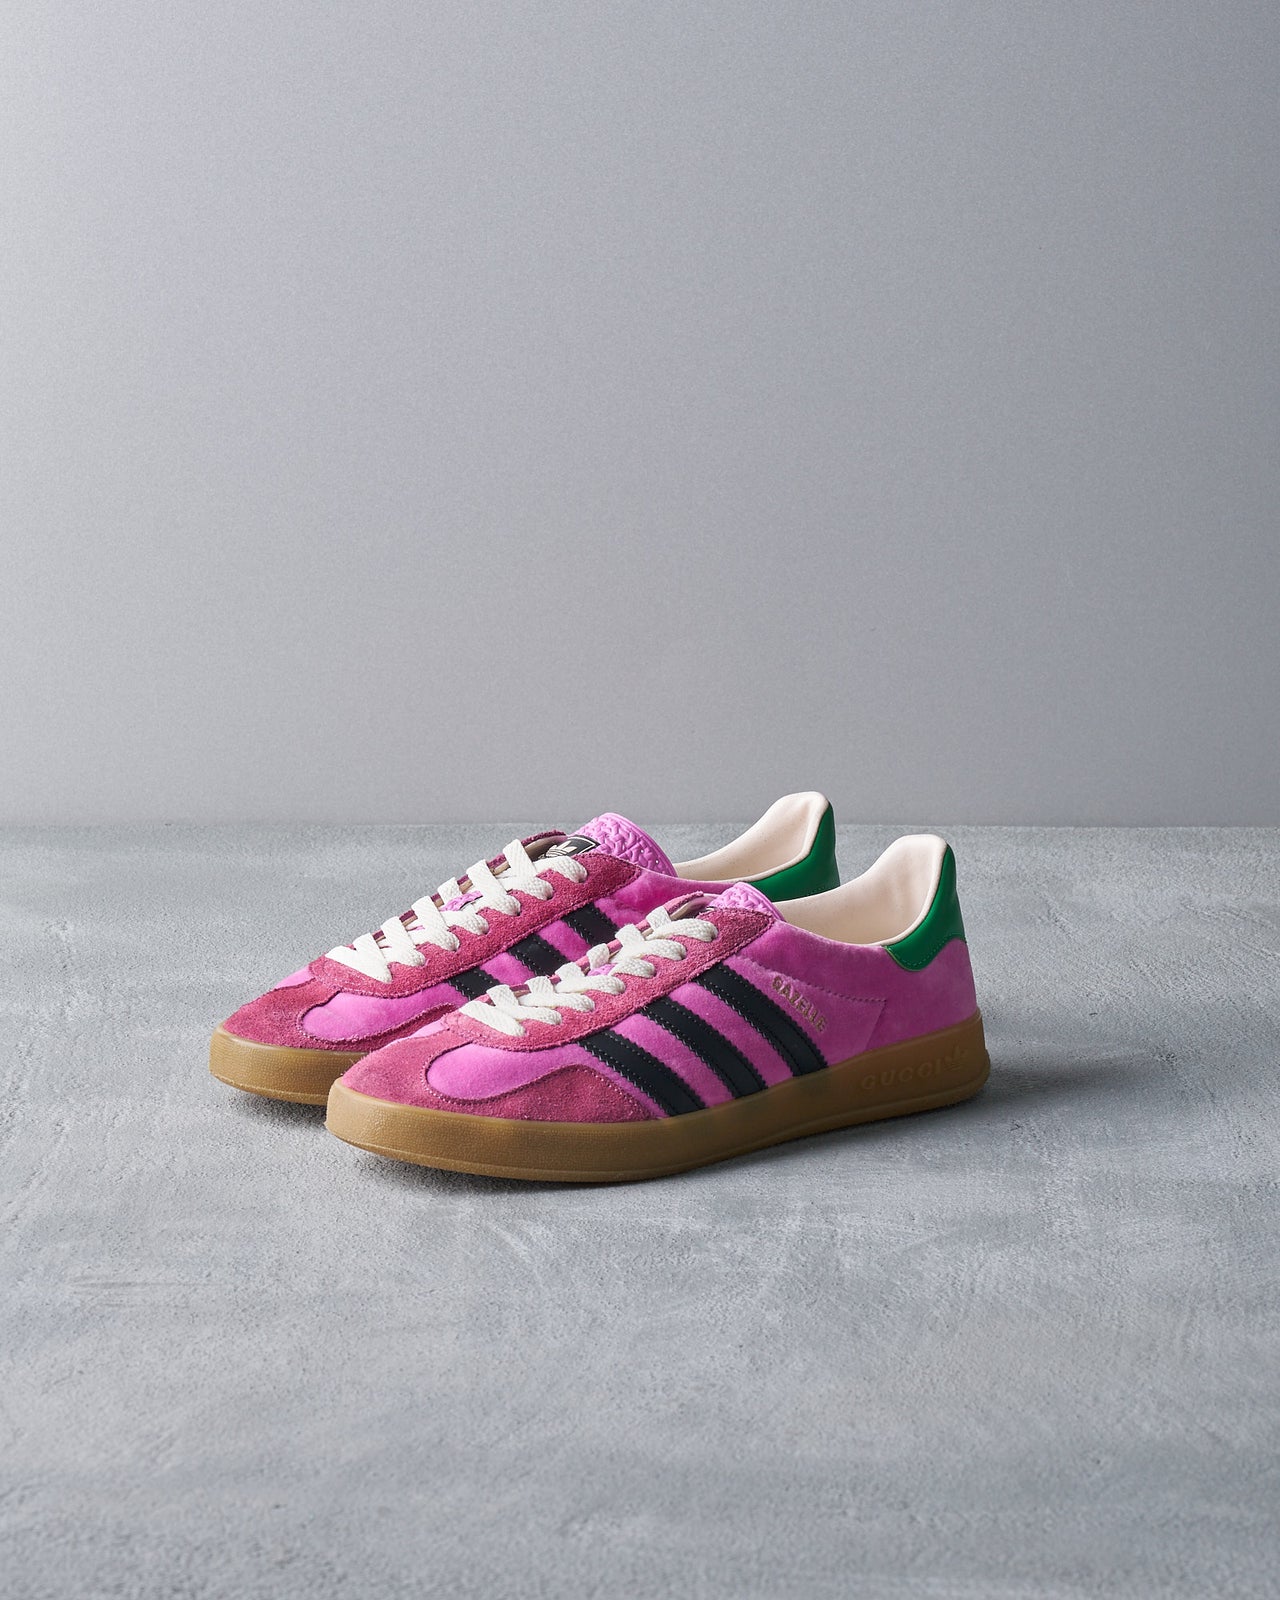 Gucci x Adidas 2022 "Pink Velvet" Gazelle